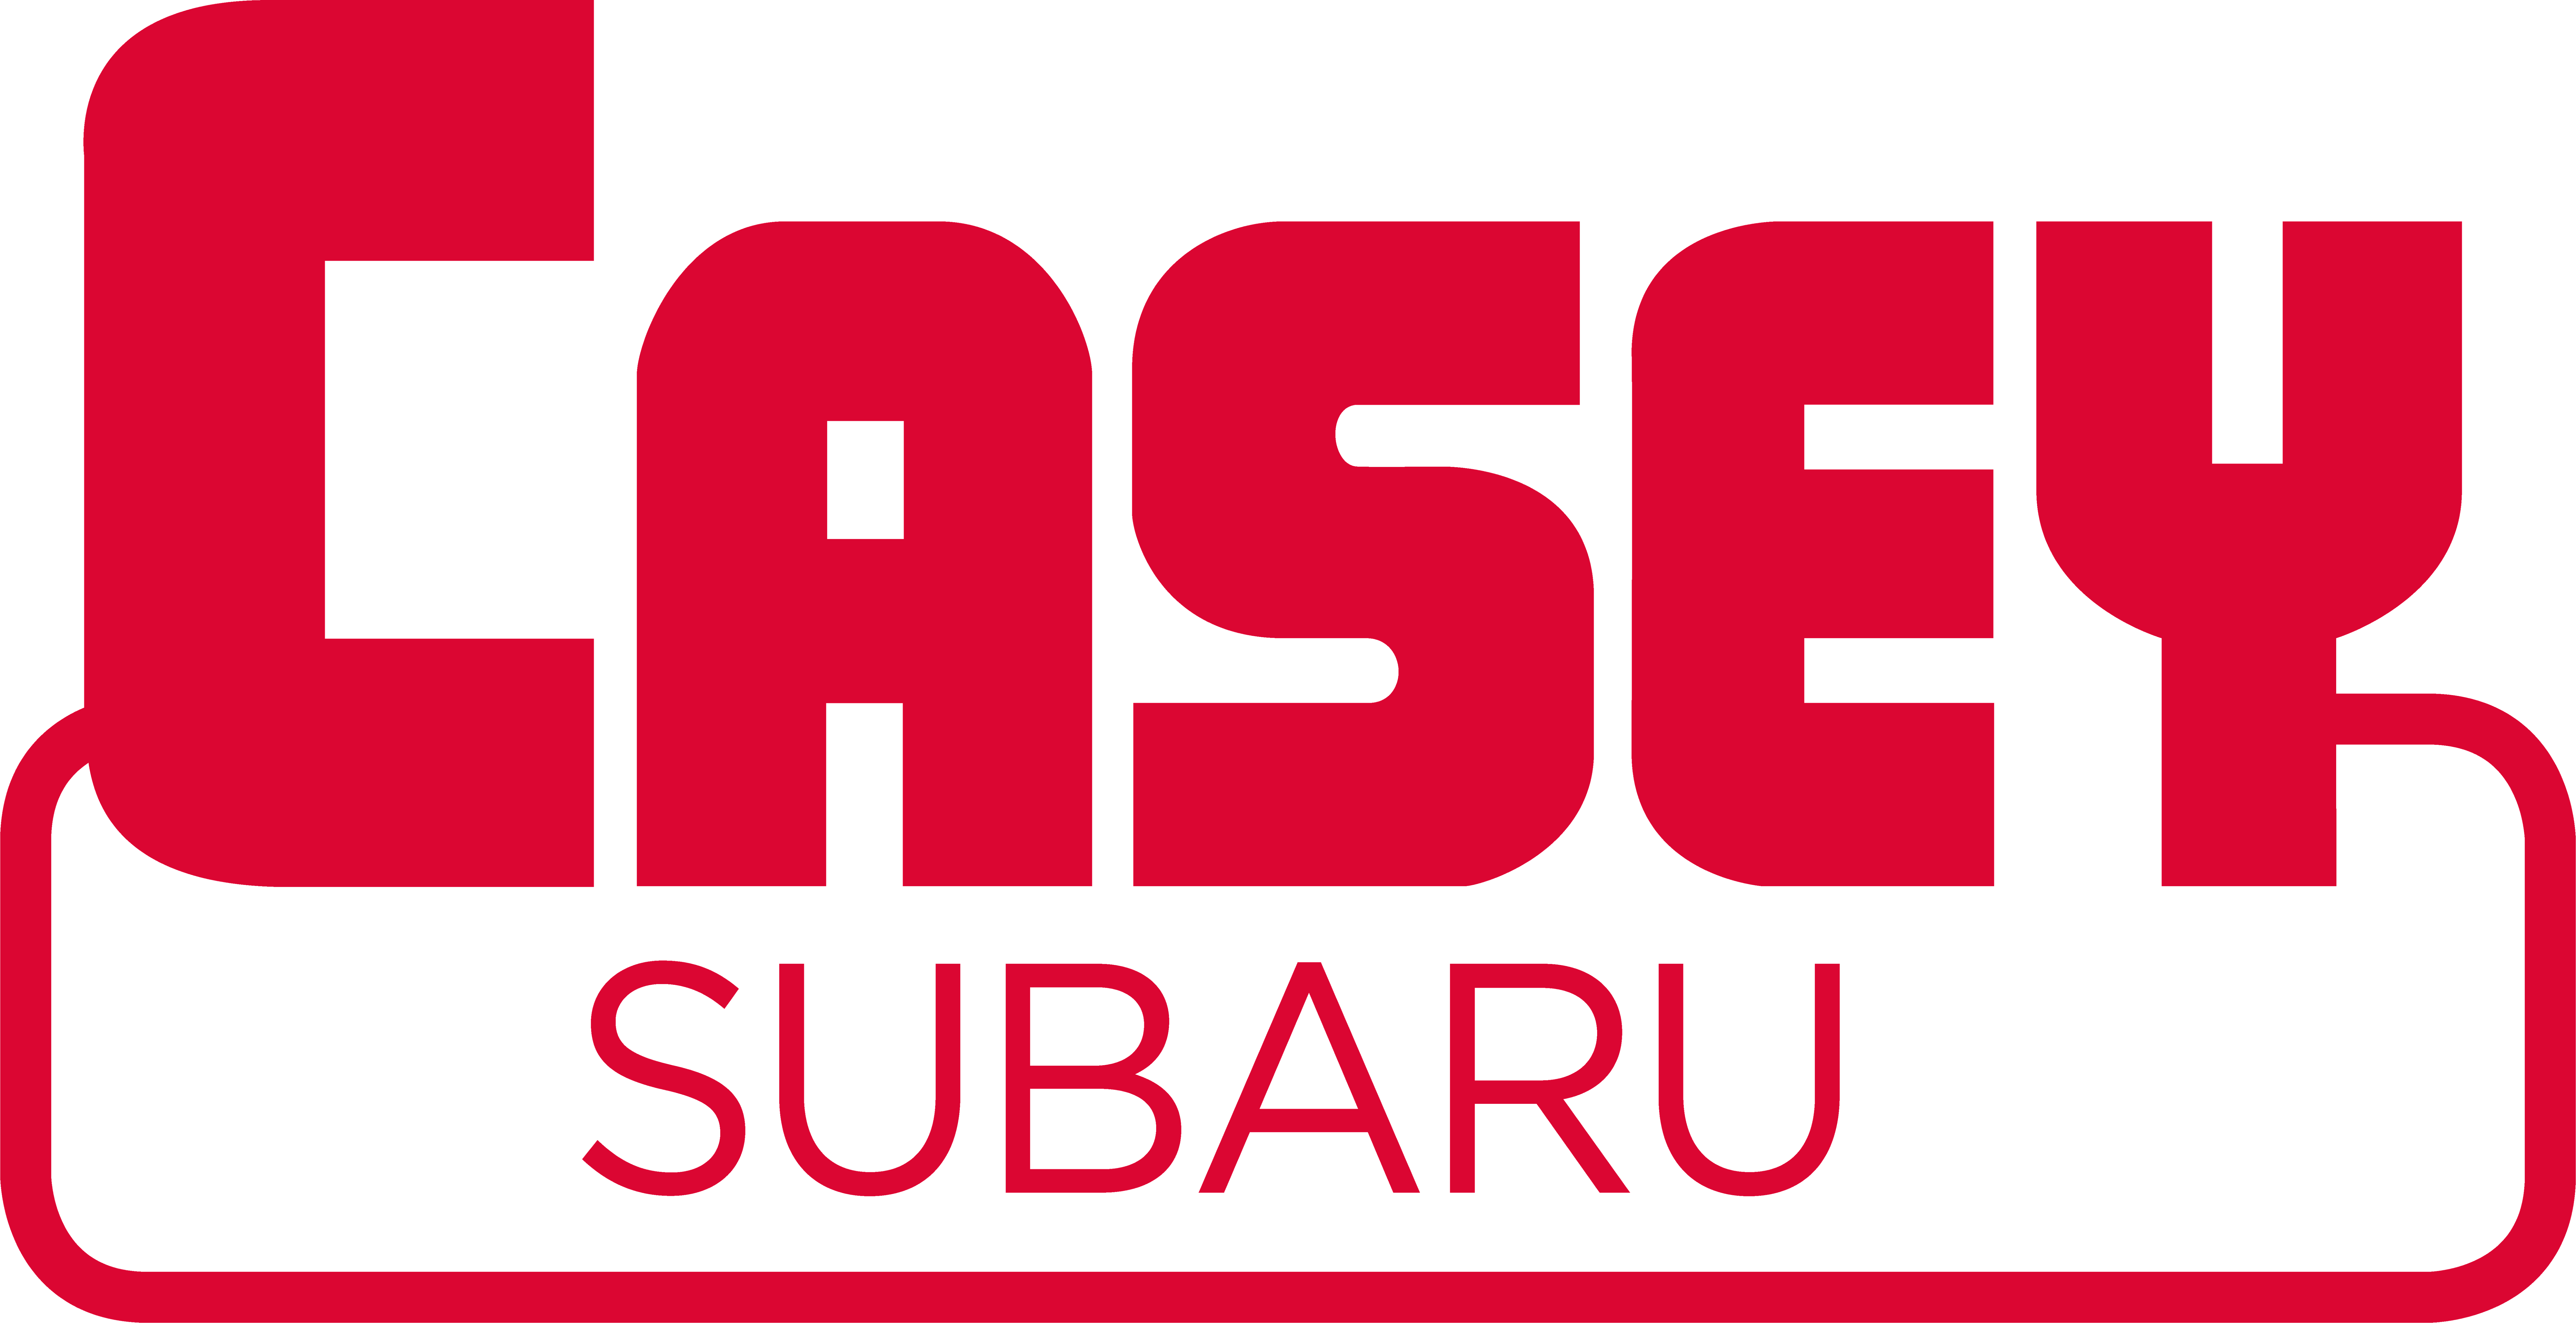 Schedule Service with Casey Subaru